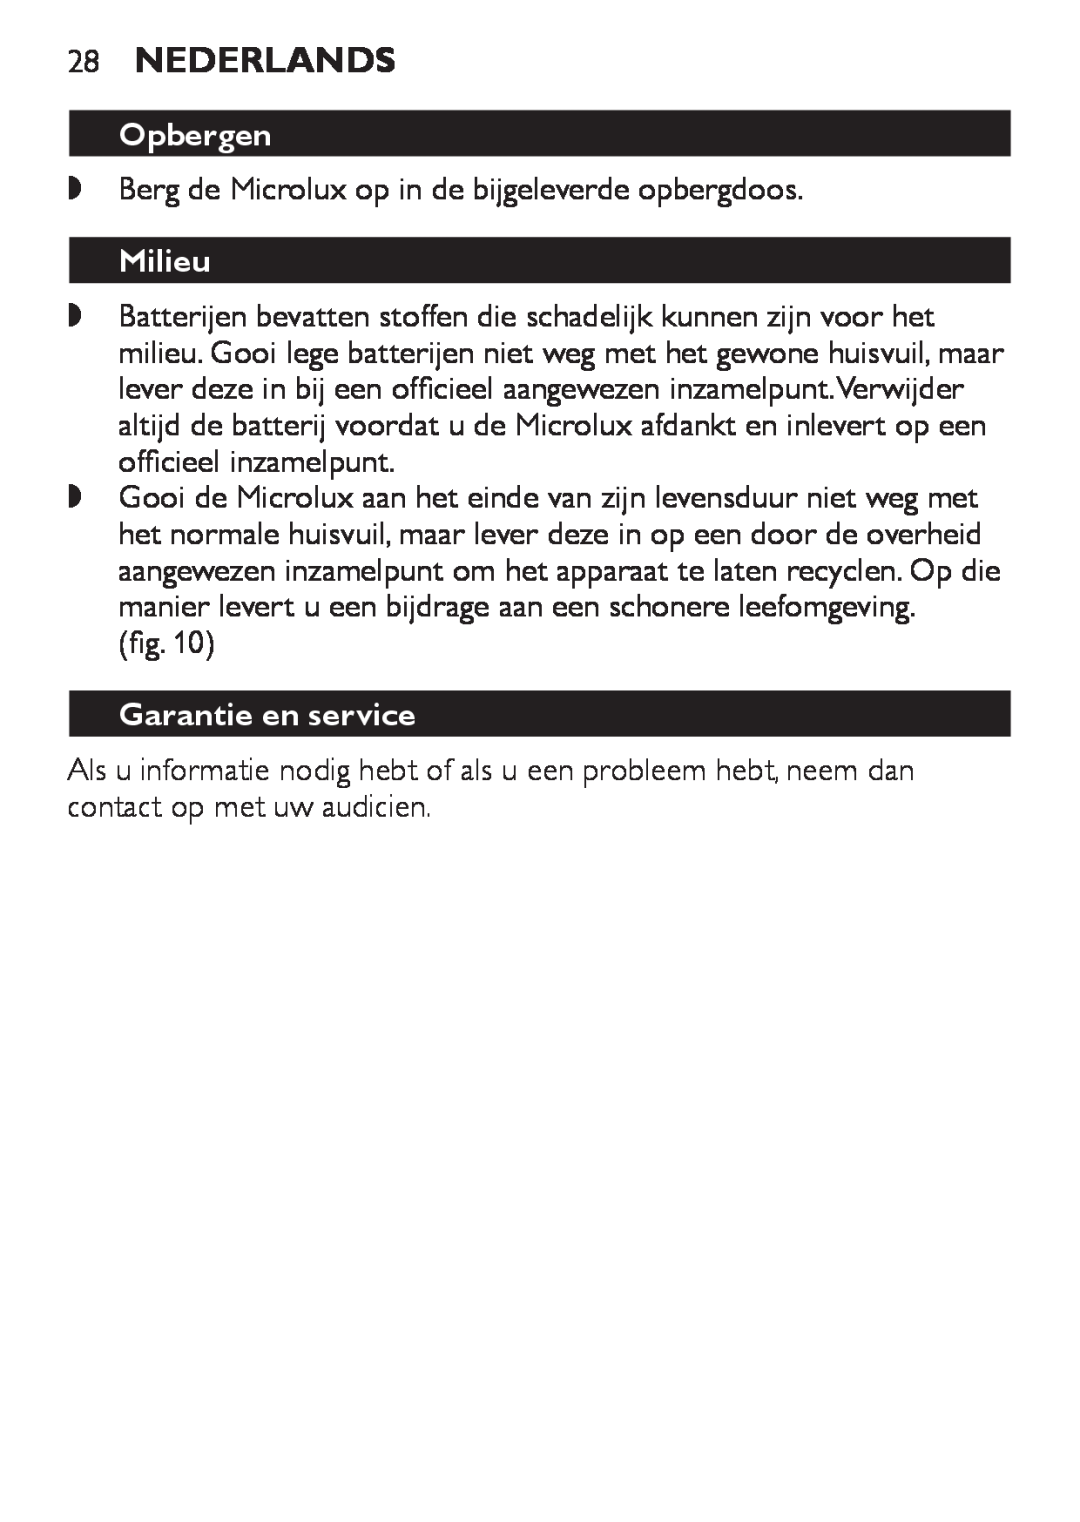 Philips HC8900 user manual 28Nederlands, Opbergen, Milieu, Garantie en service 